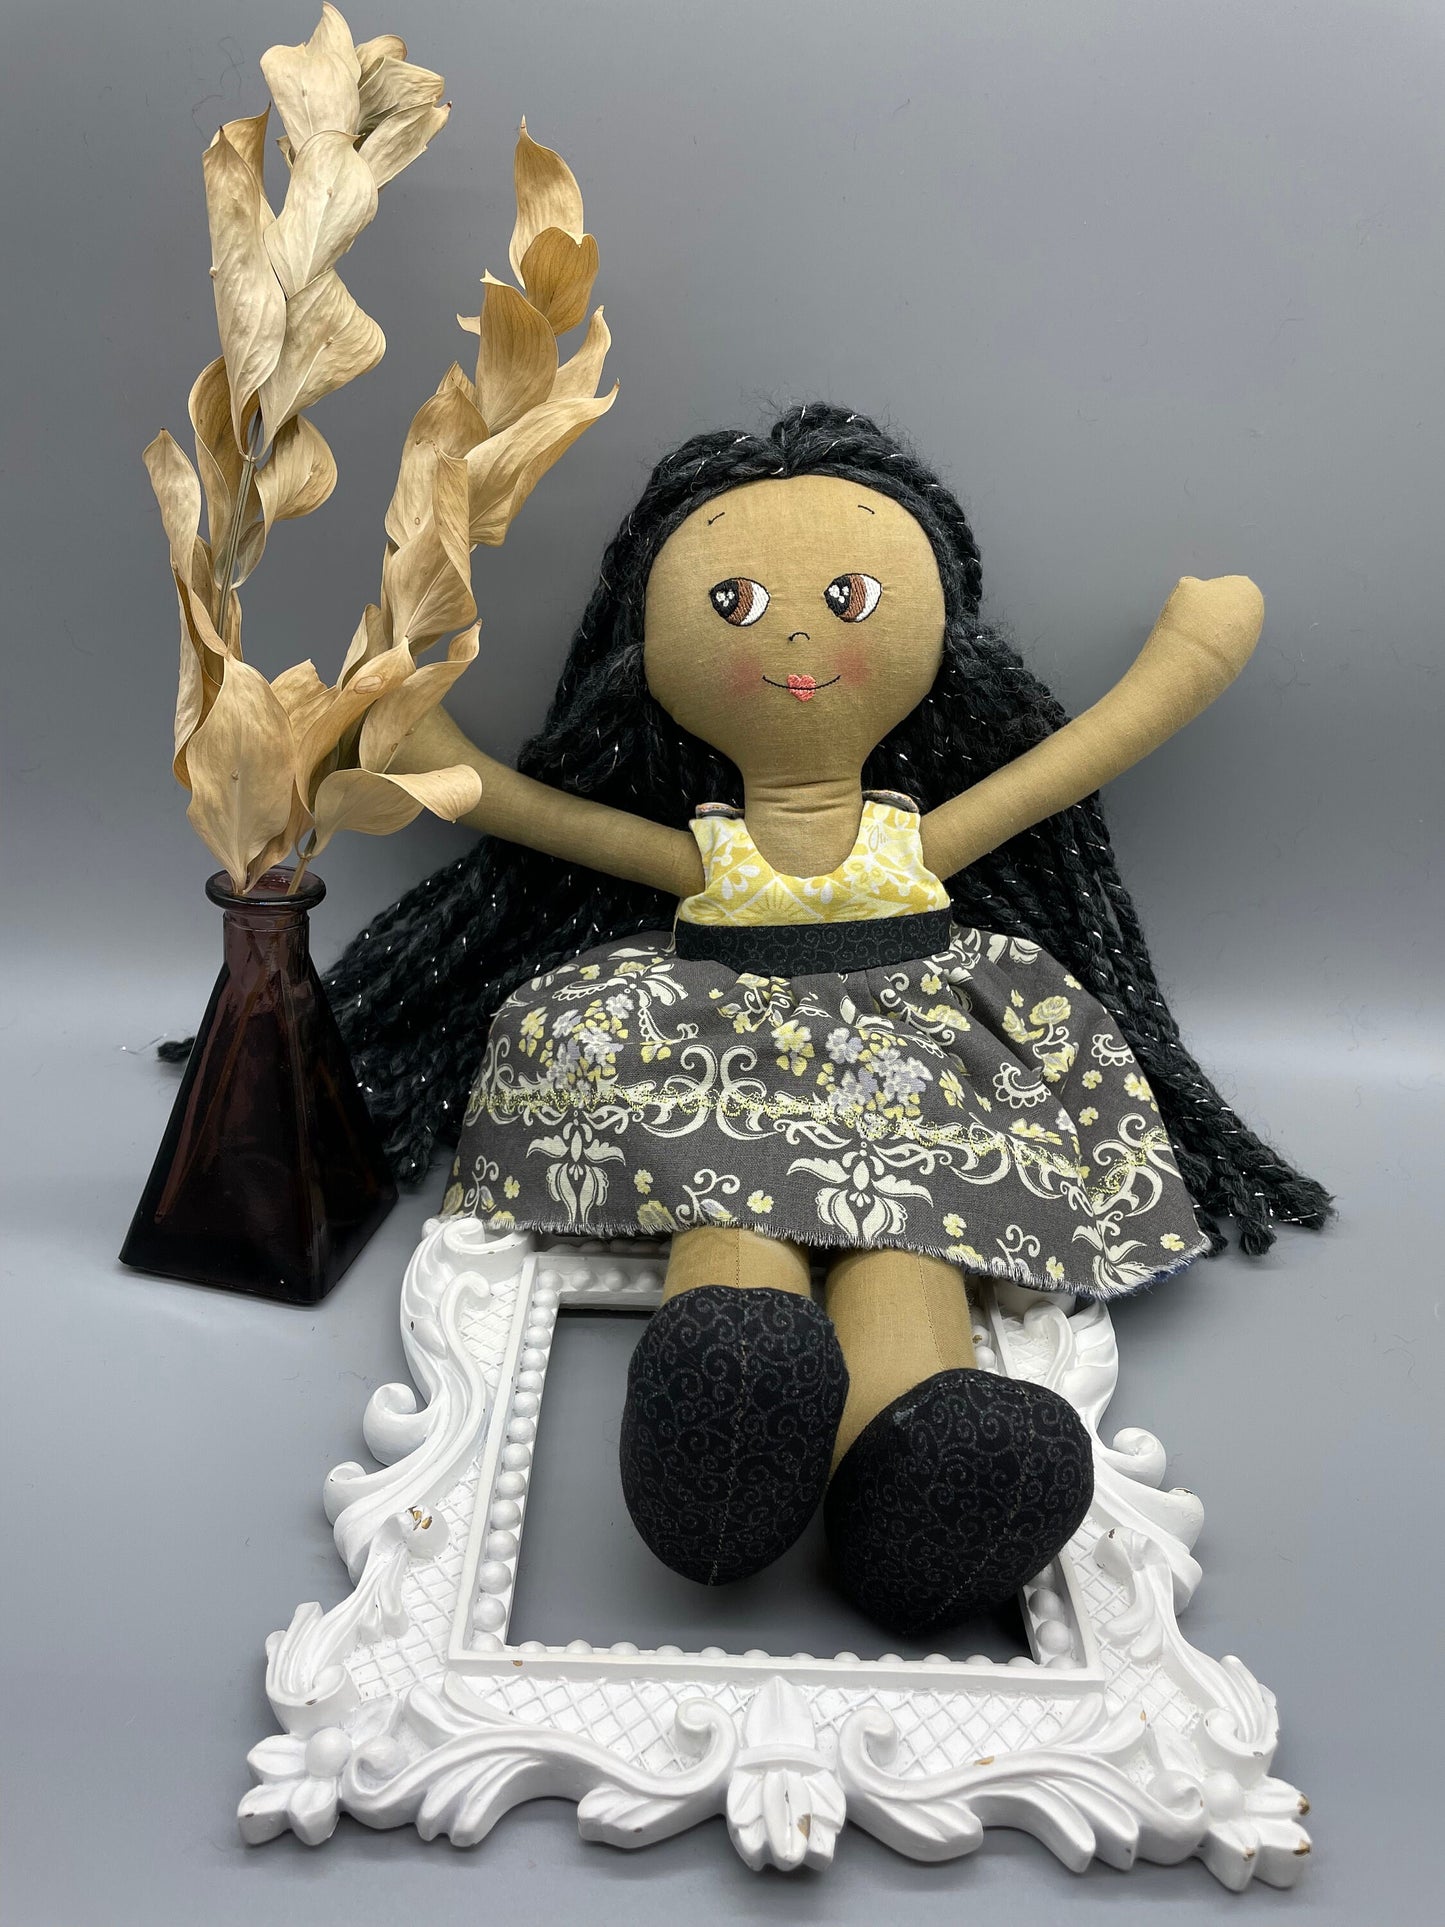 REVERSIBLE DRESS, Handmade Doll, "HATTIE", handmade gift, cloth doll, fabric doll, black doll, diverse doll, heirloom doll, Brown Muslin